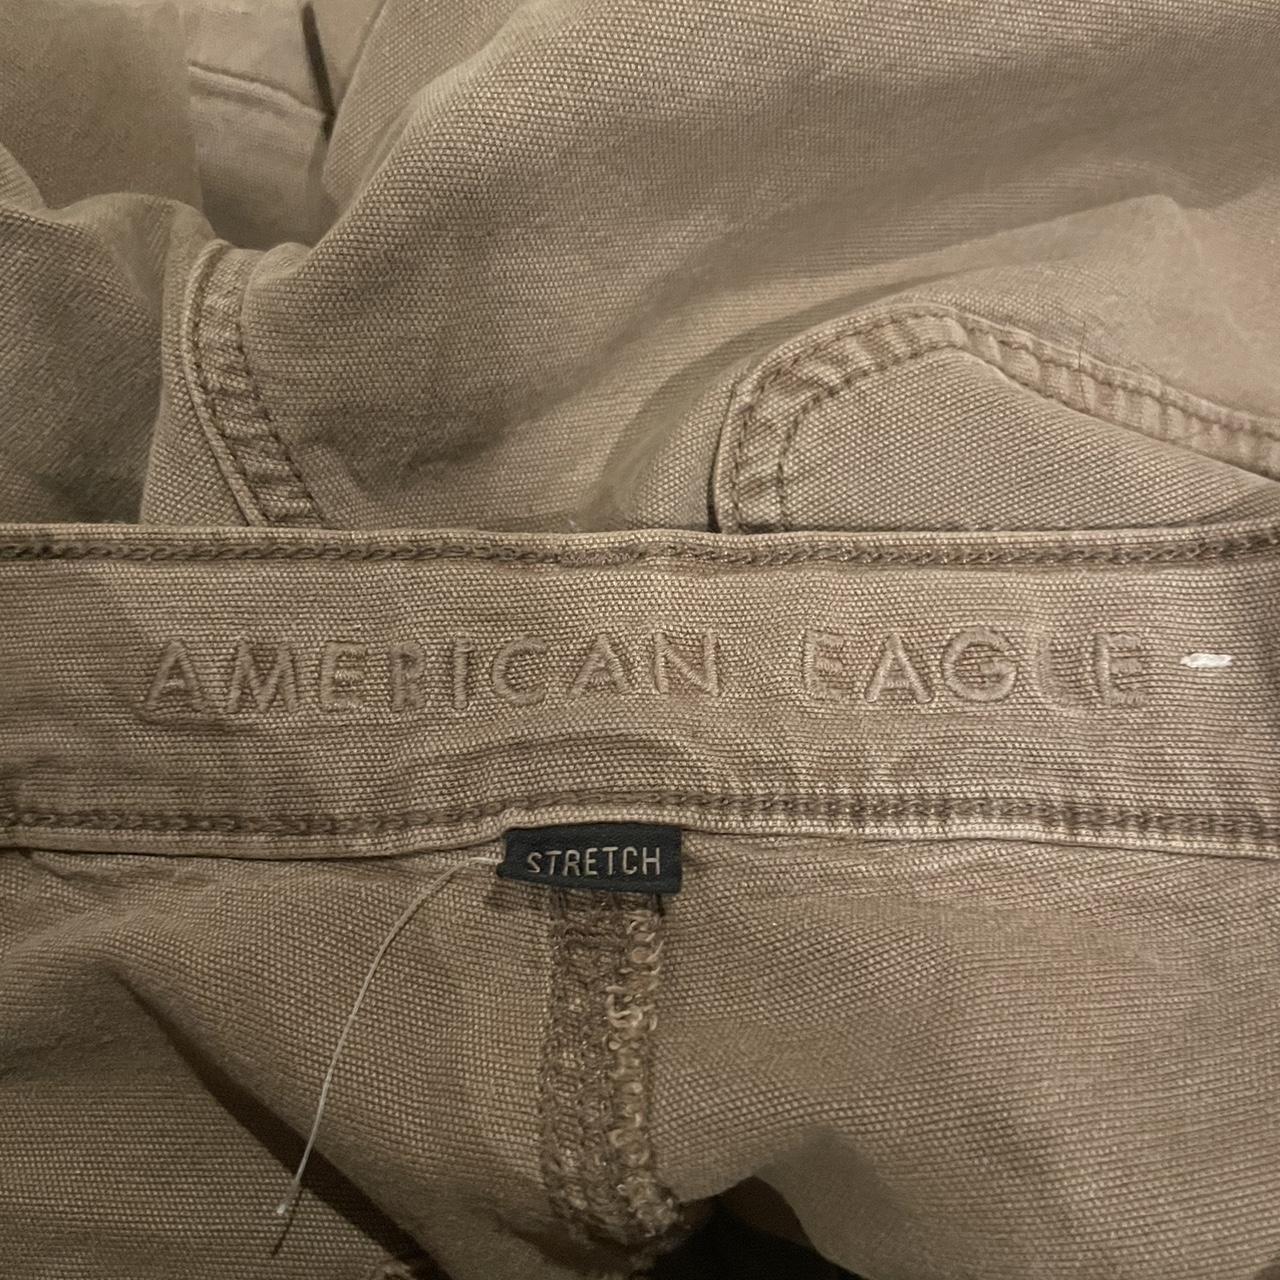 american eagle cargo pants - Depop